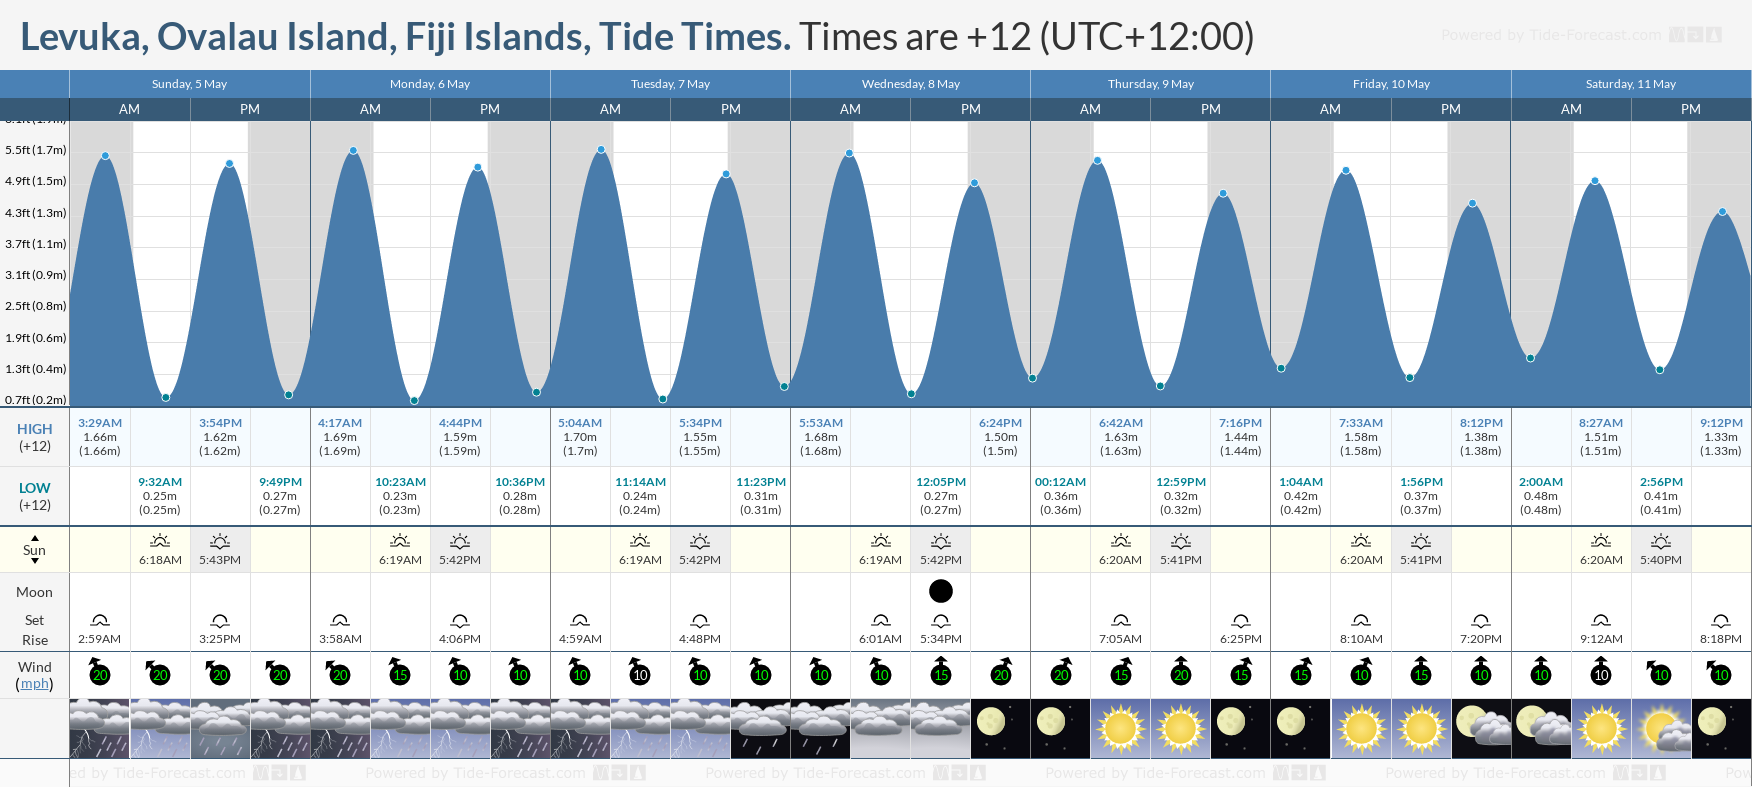 Levuka, Ovalau Island, Fiji Islands Tide Chart including high and low tide times for the next 7 days